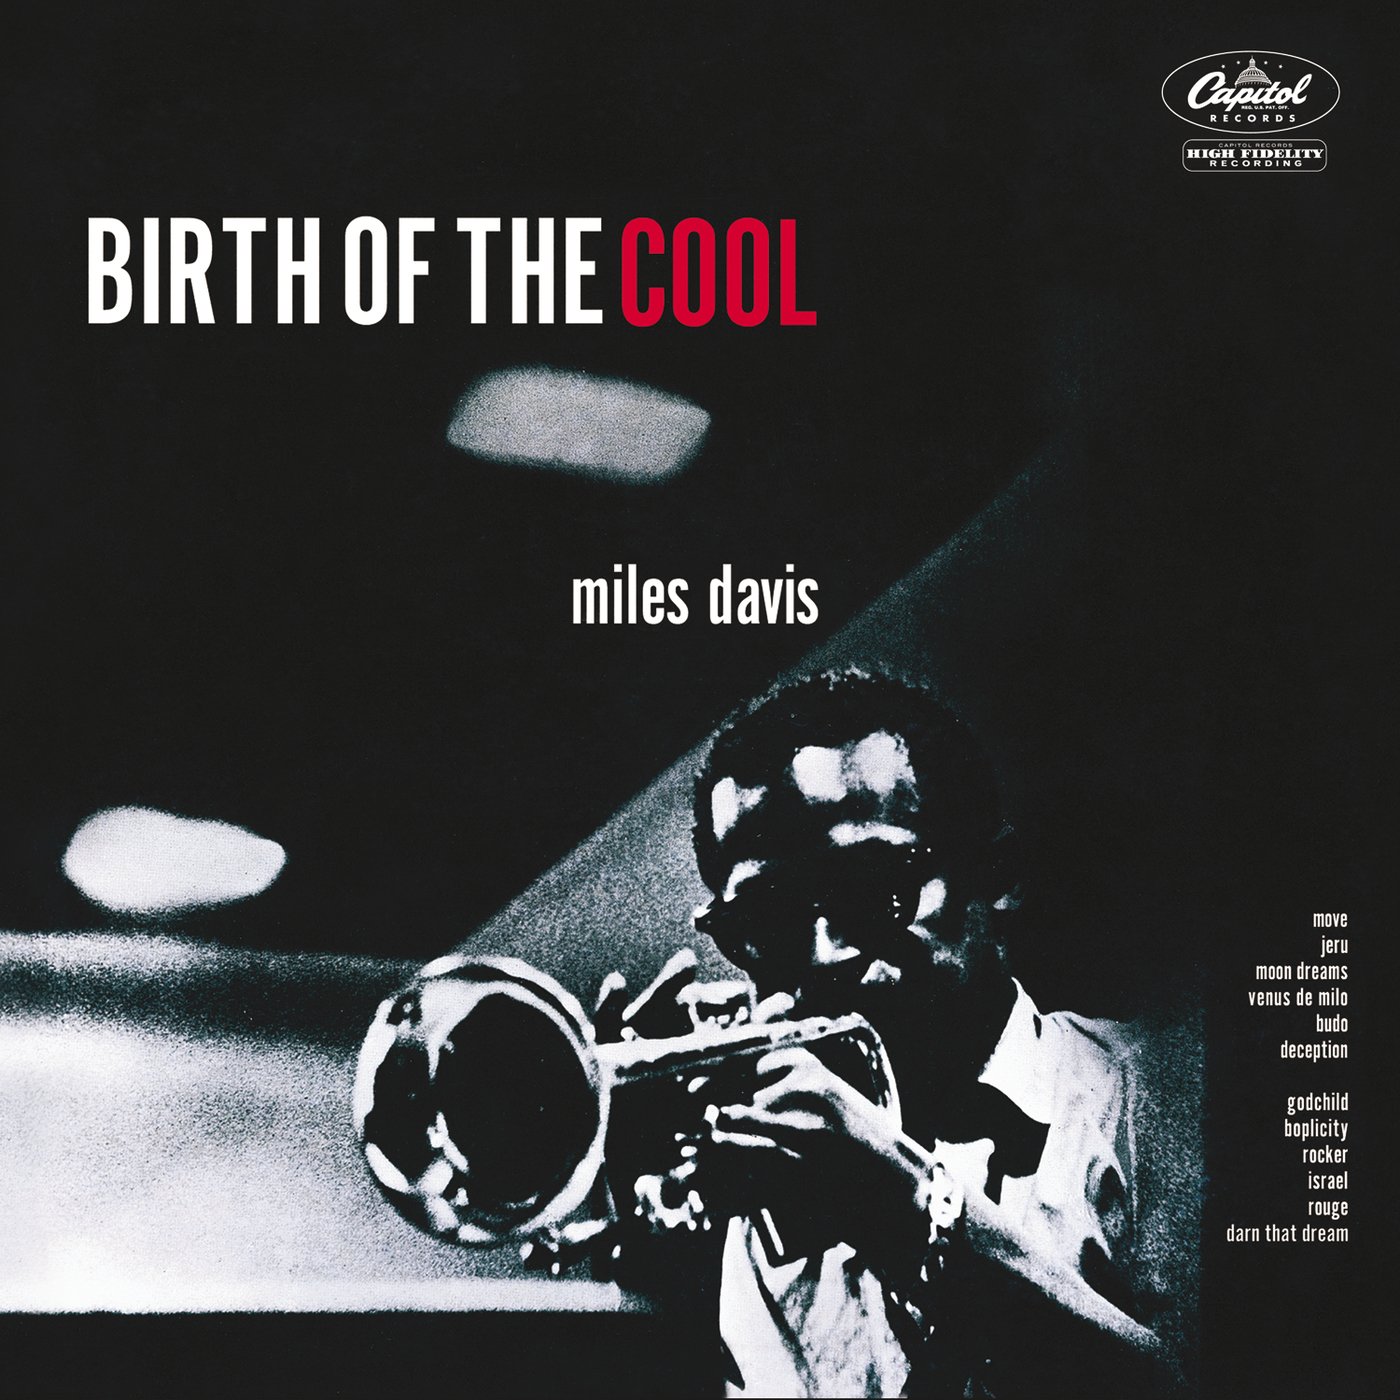 Birth Of The Cool w/ Bonus Montreux DVD (Blu-ray + DVD) on MovieShack